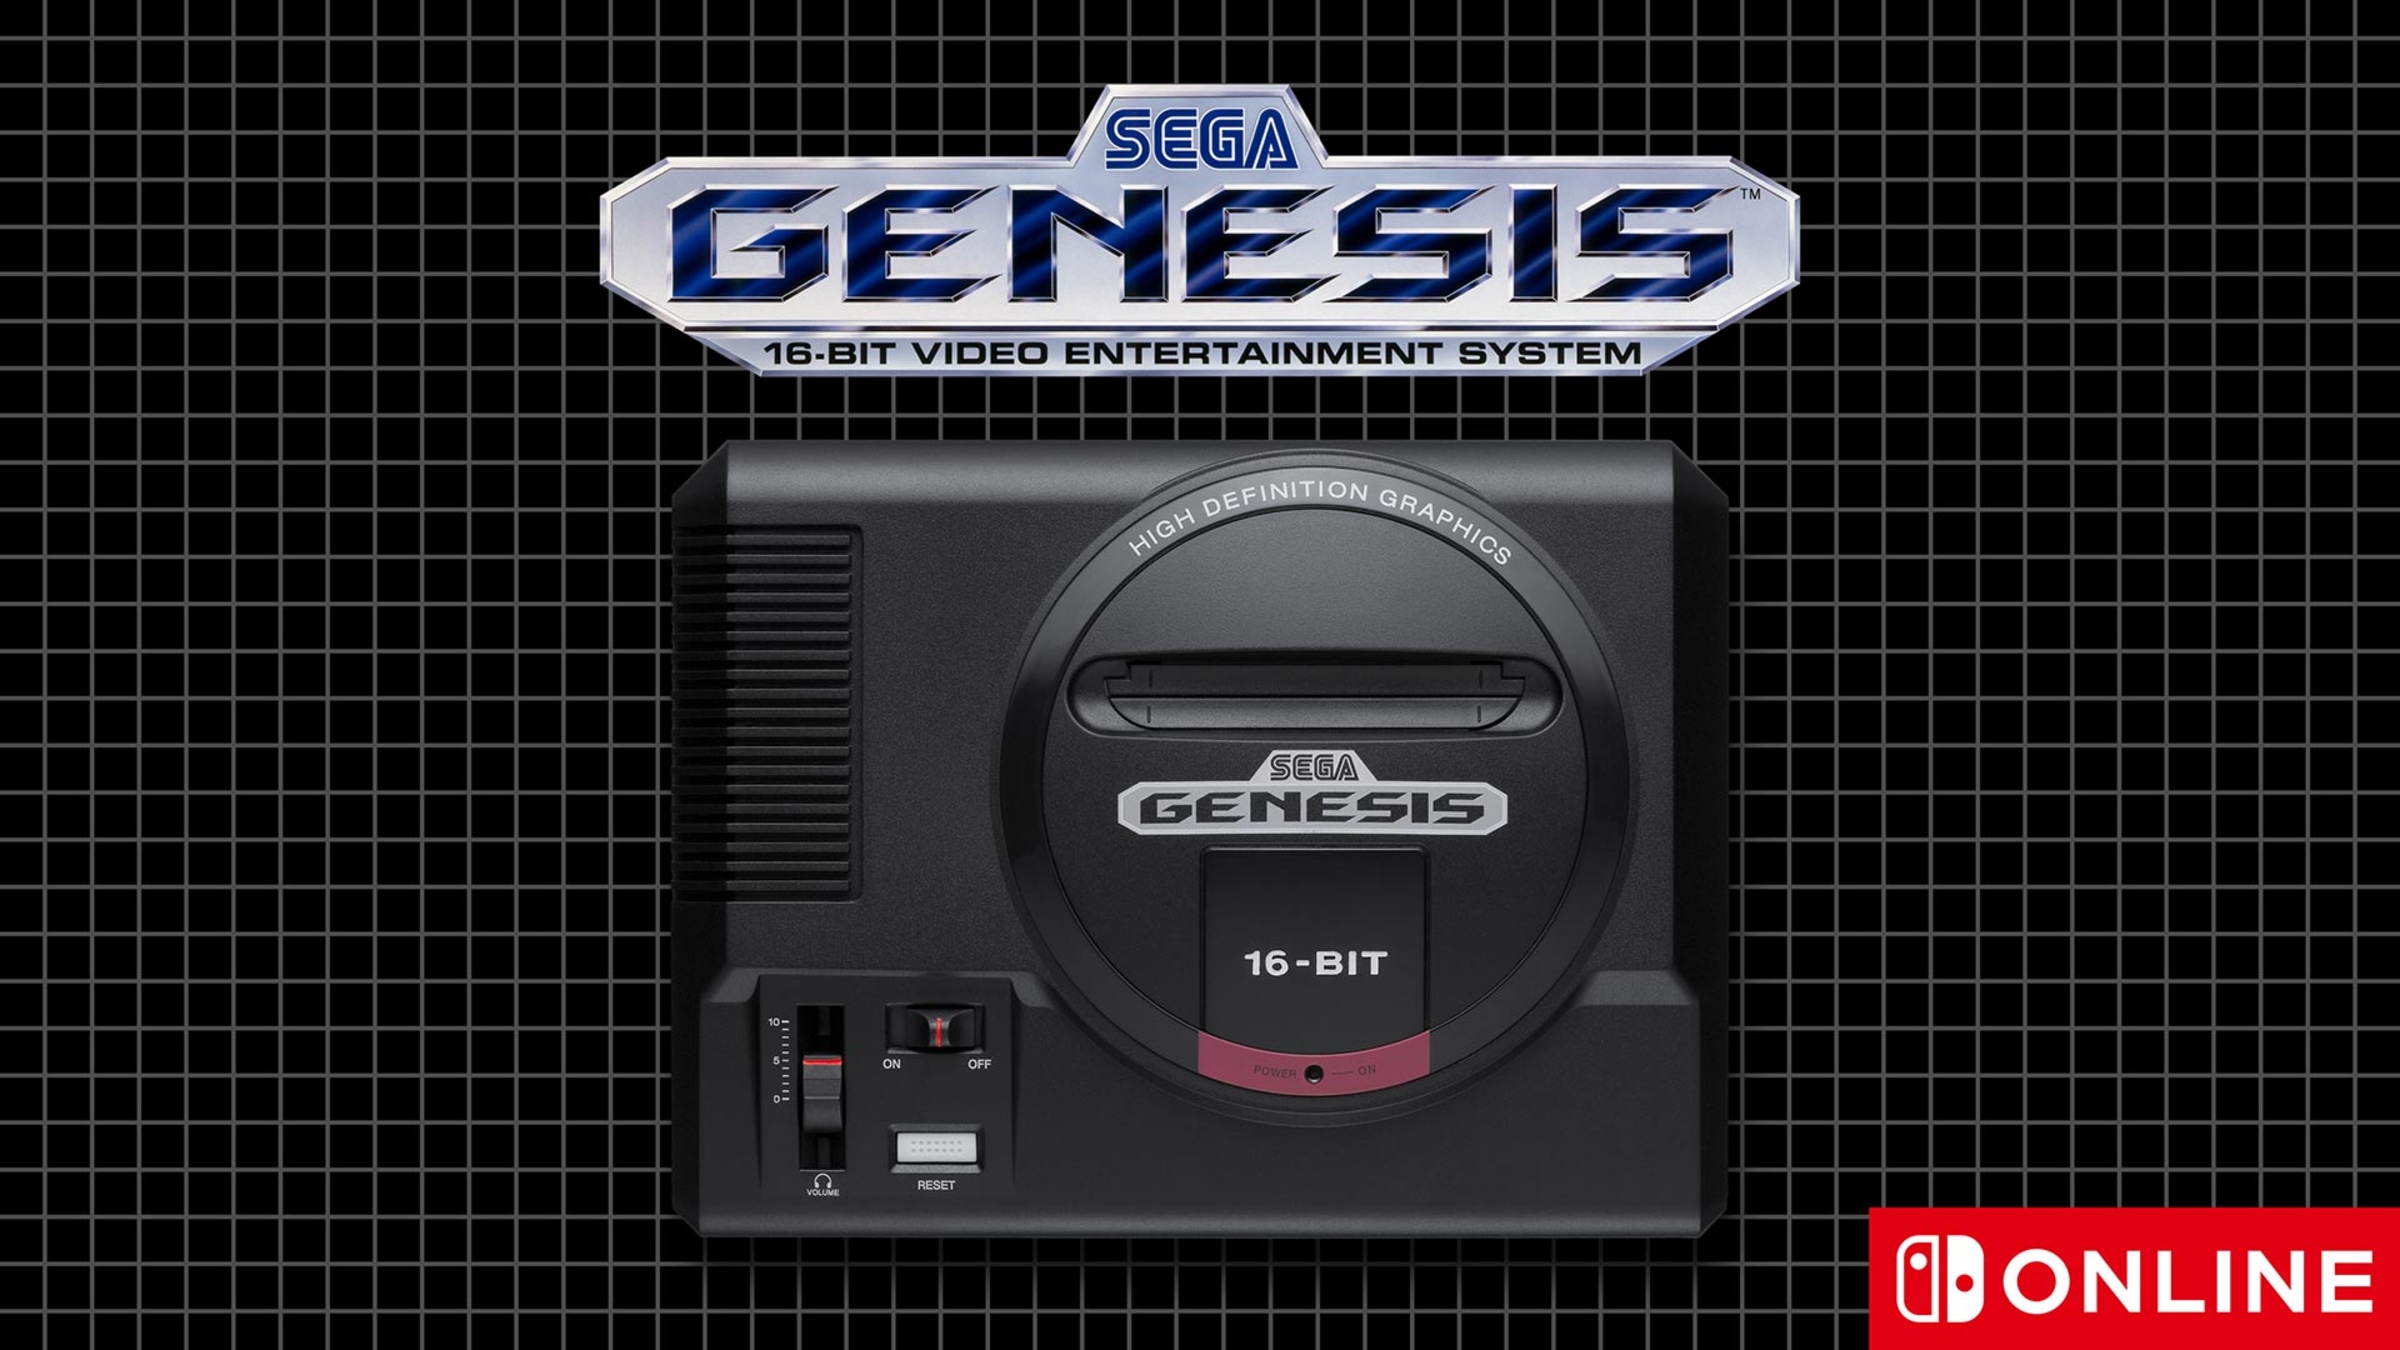 Play Sonic Classic Heroes Online - Sega Genesis Classic Games